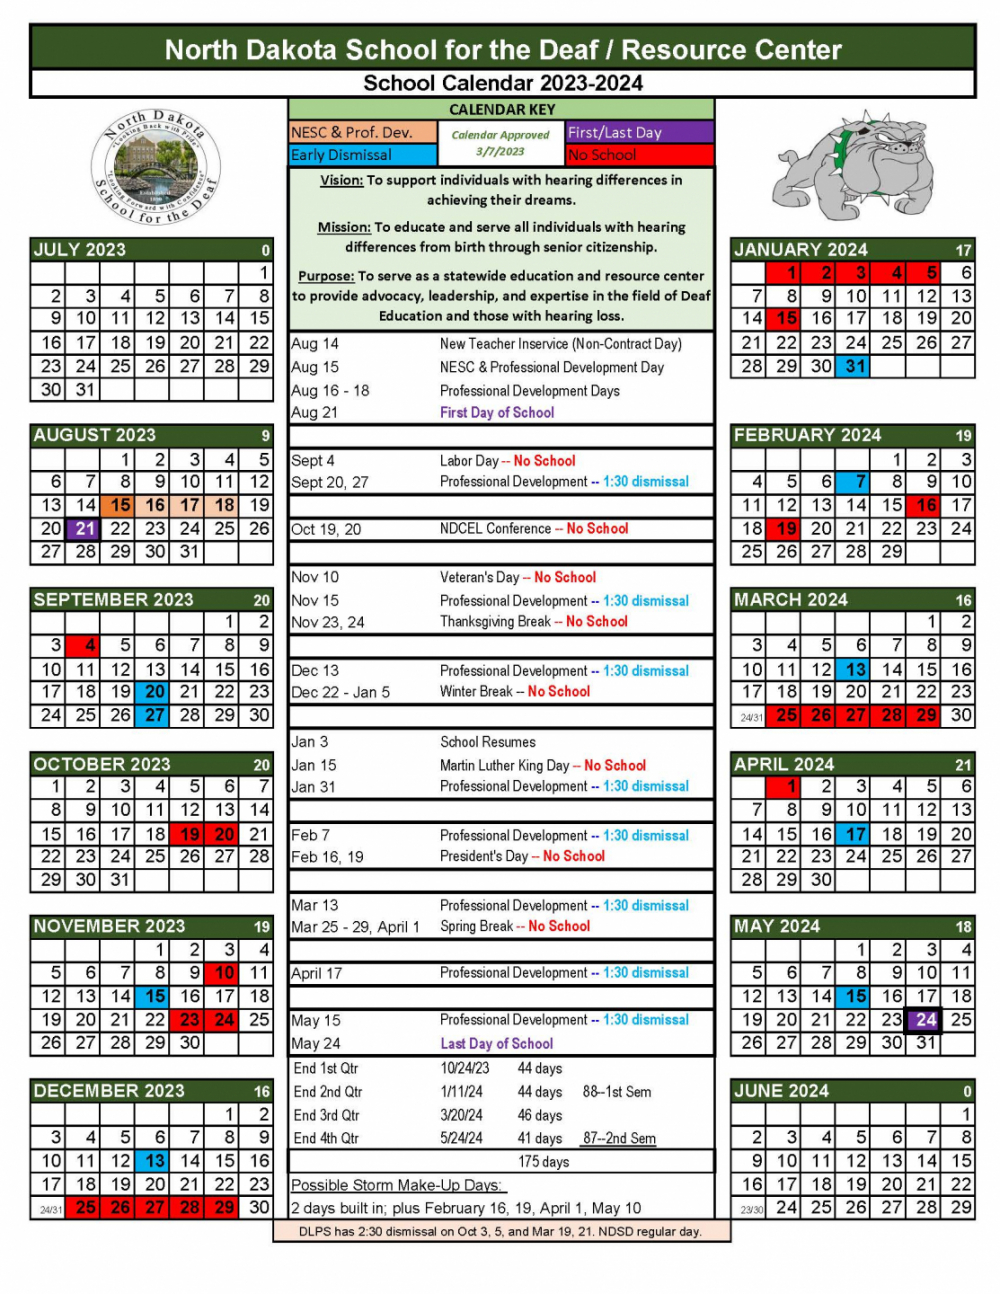 2023-2024 School Calendar with breakdown of holidays, no school, professional developement, holidays etc